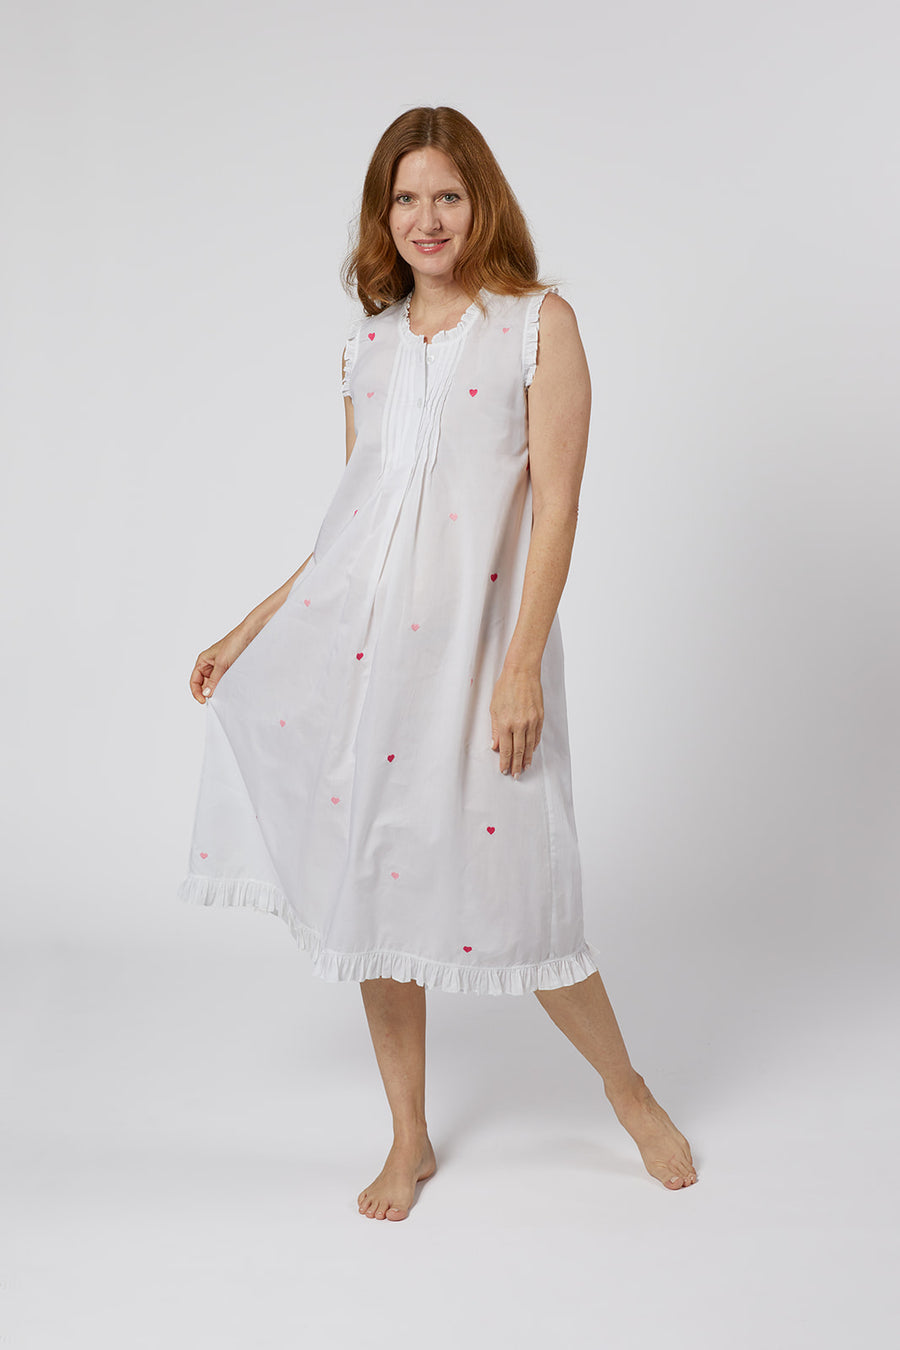 Women's Sleeveless Nightgown With Ruffle Trim